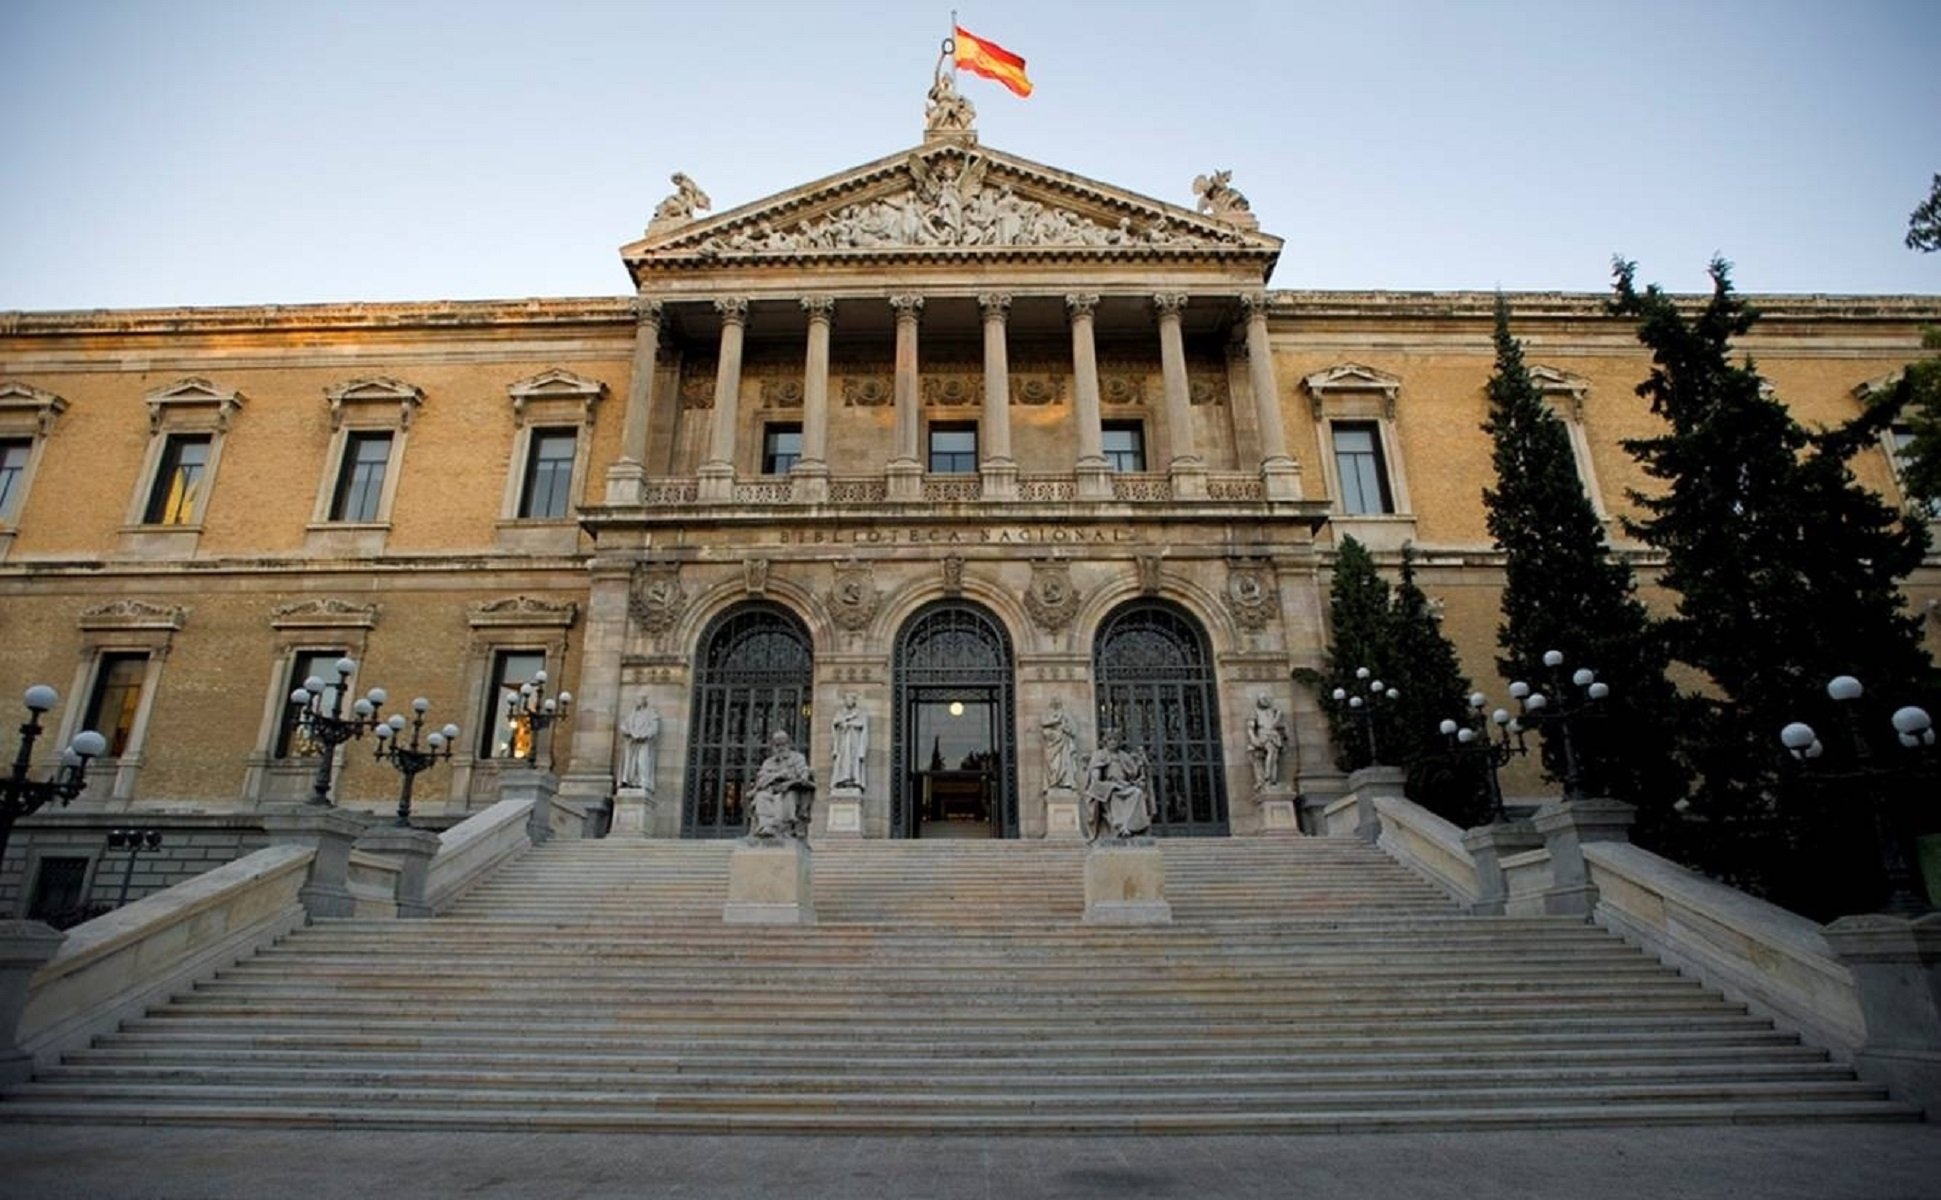 La Biblioteca Nacional de España menysprea el català en una exposició literària